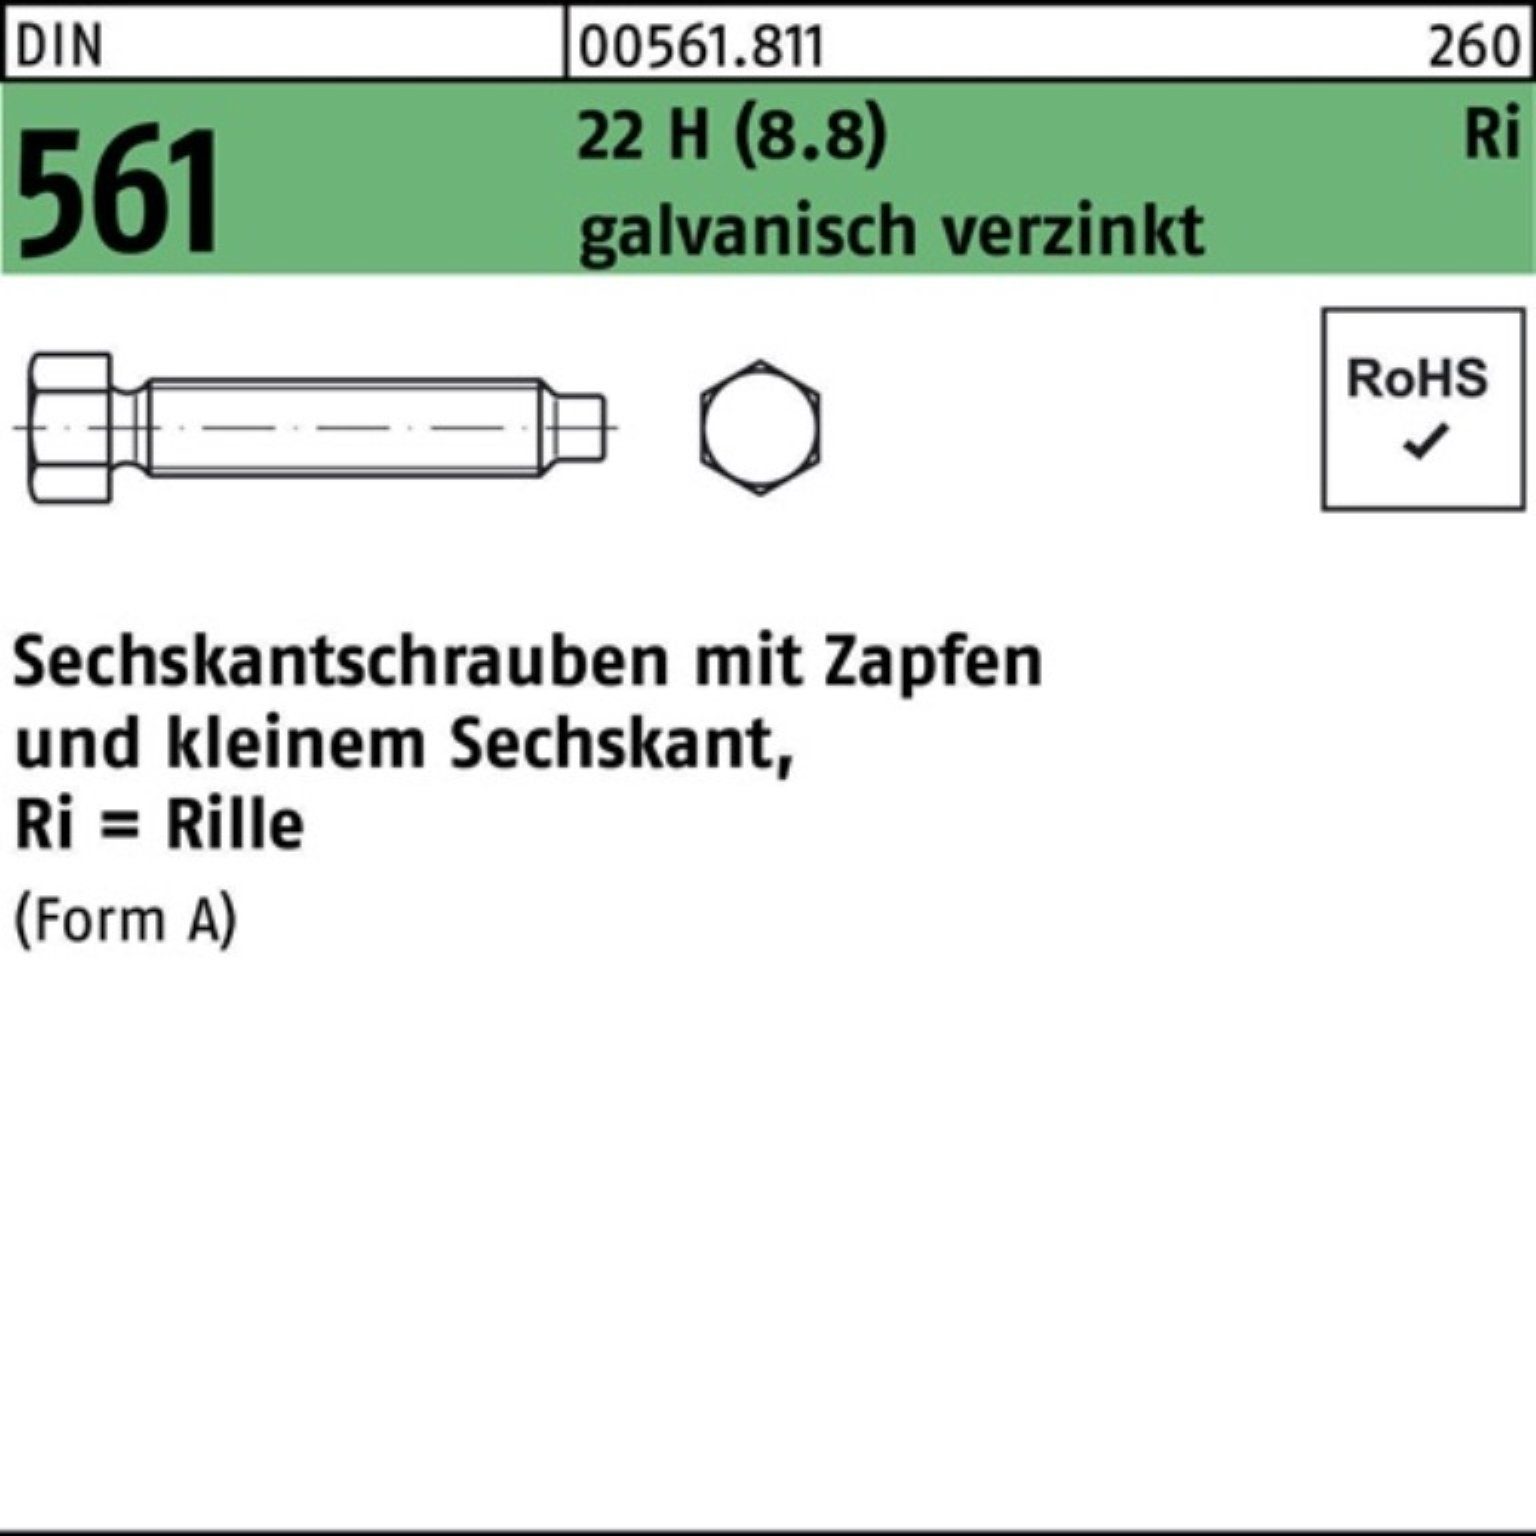 Reyher Sechskantschraube 100er Sechskantschraube H Zapfen Pack AM 22 galv.ve (8.8) 8x25 DIN 561